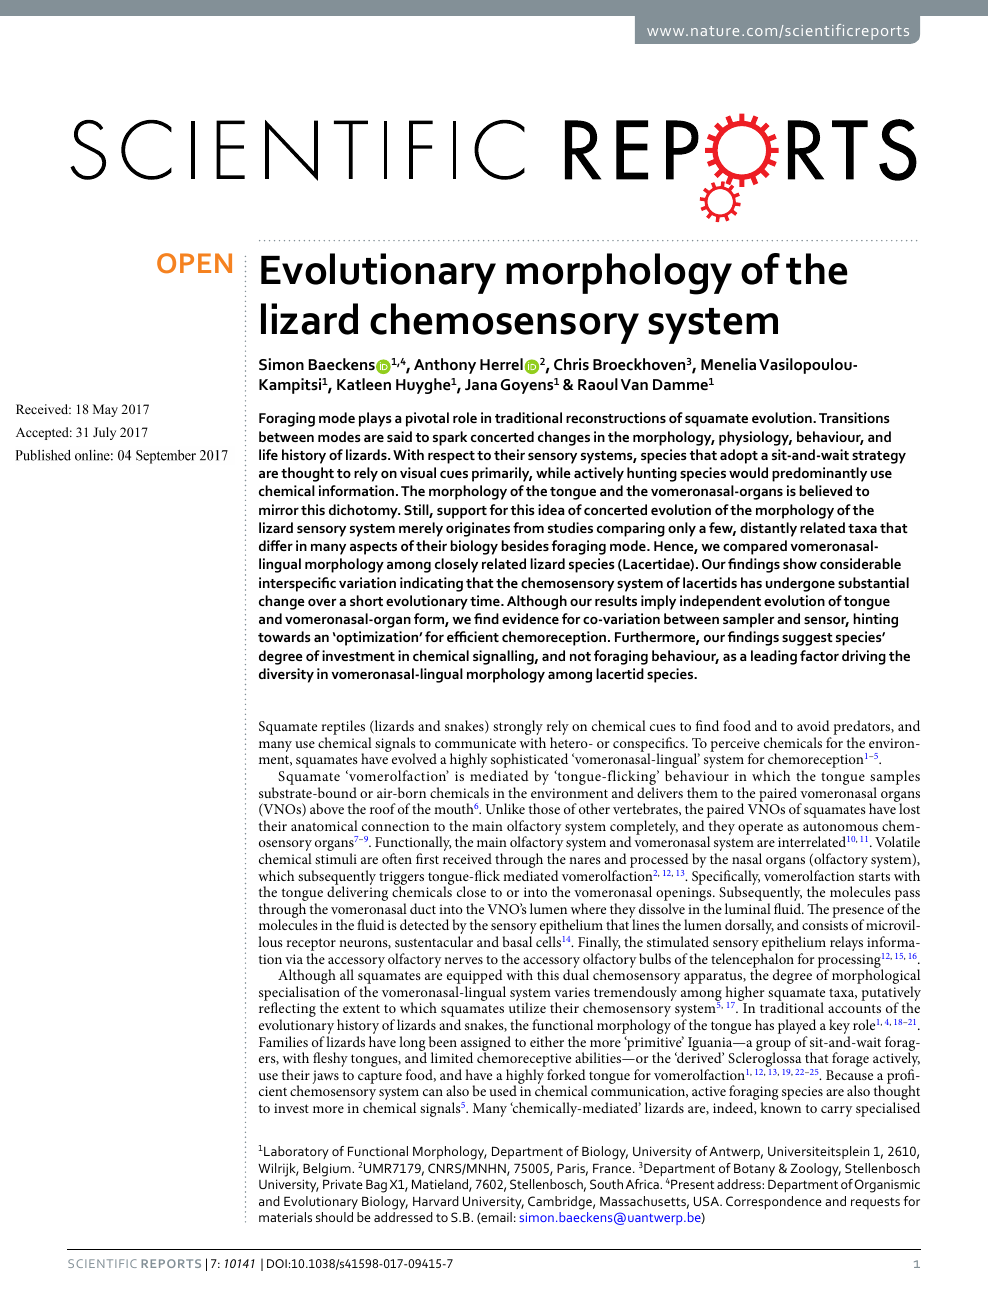 Evolutionary Morphology Of The Lizard Chemosensory System - 